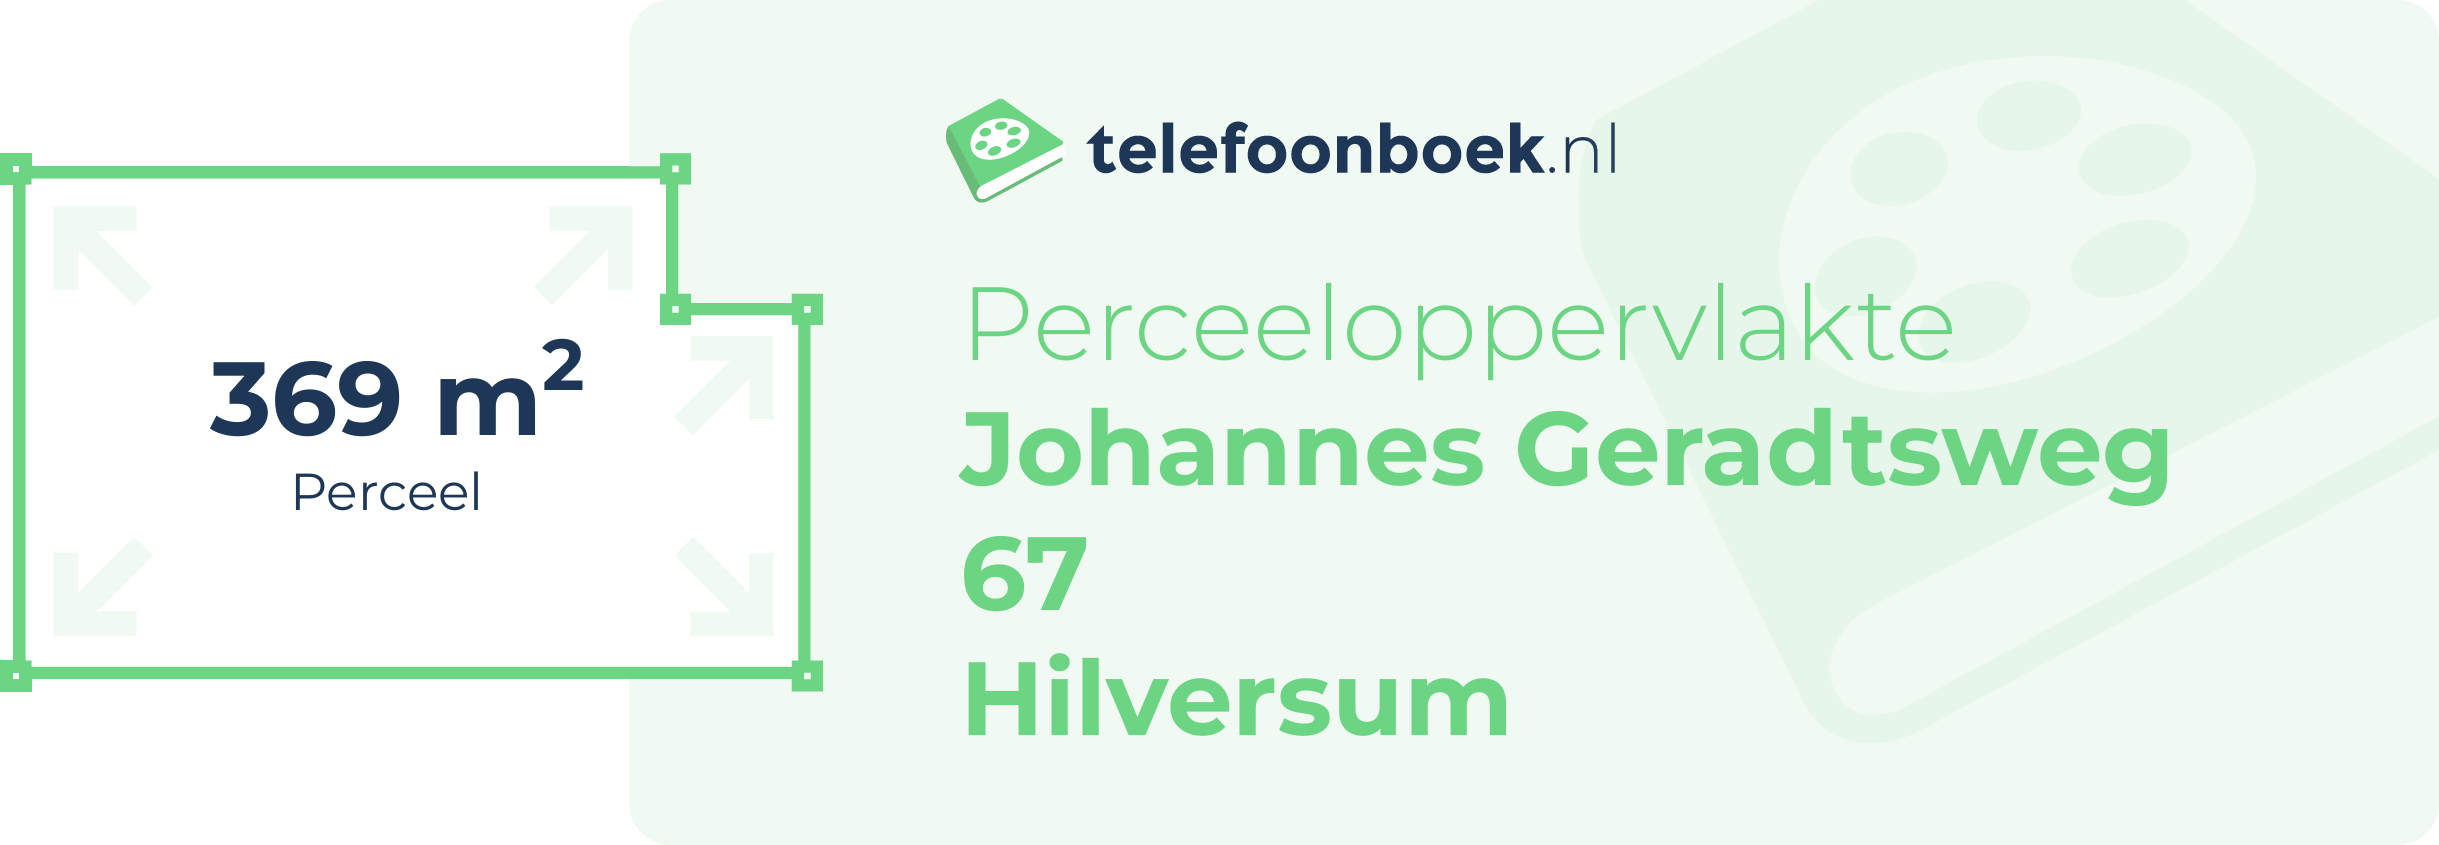 Perceeloppervlakte Johannes Geradtsweg 67 Hilversum